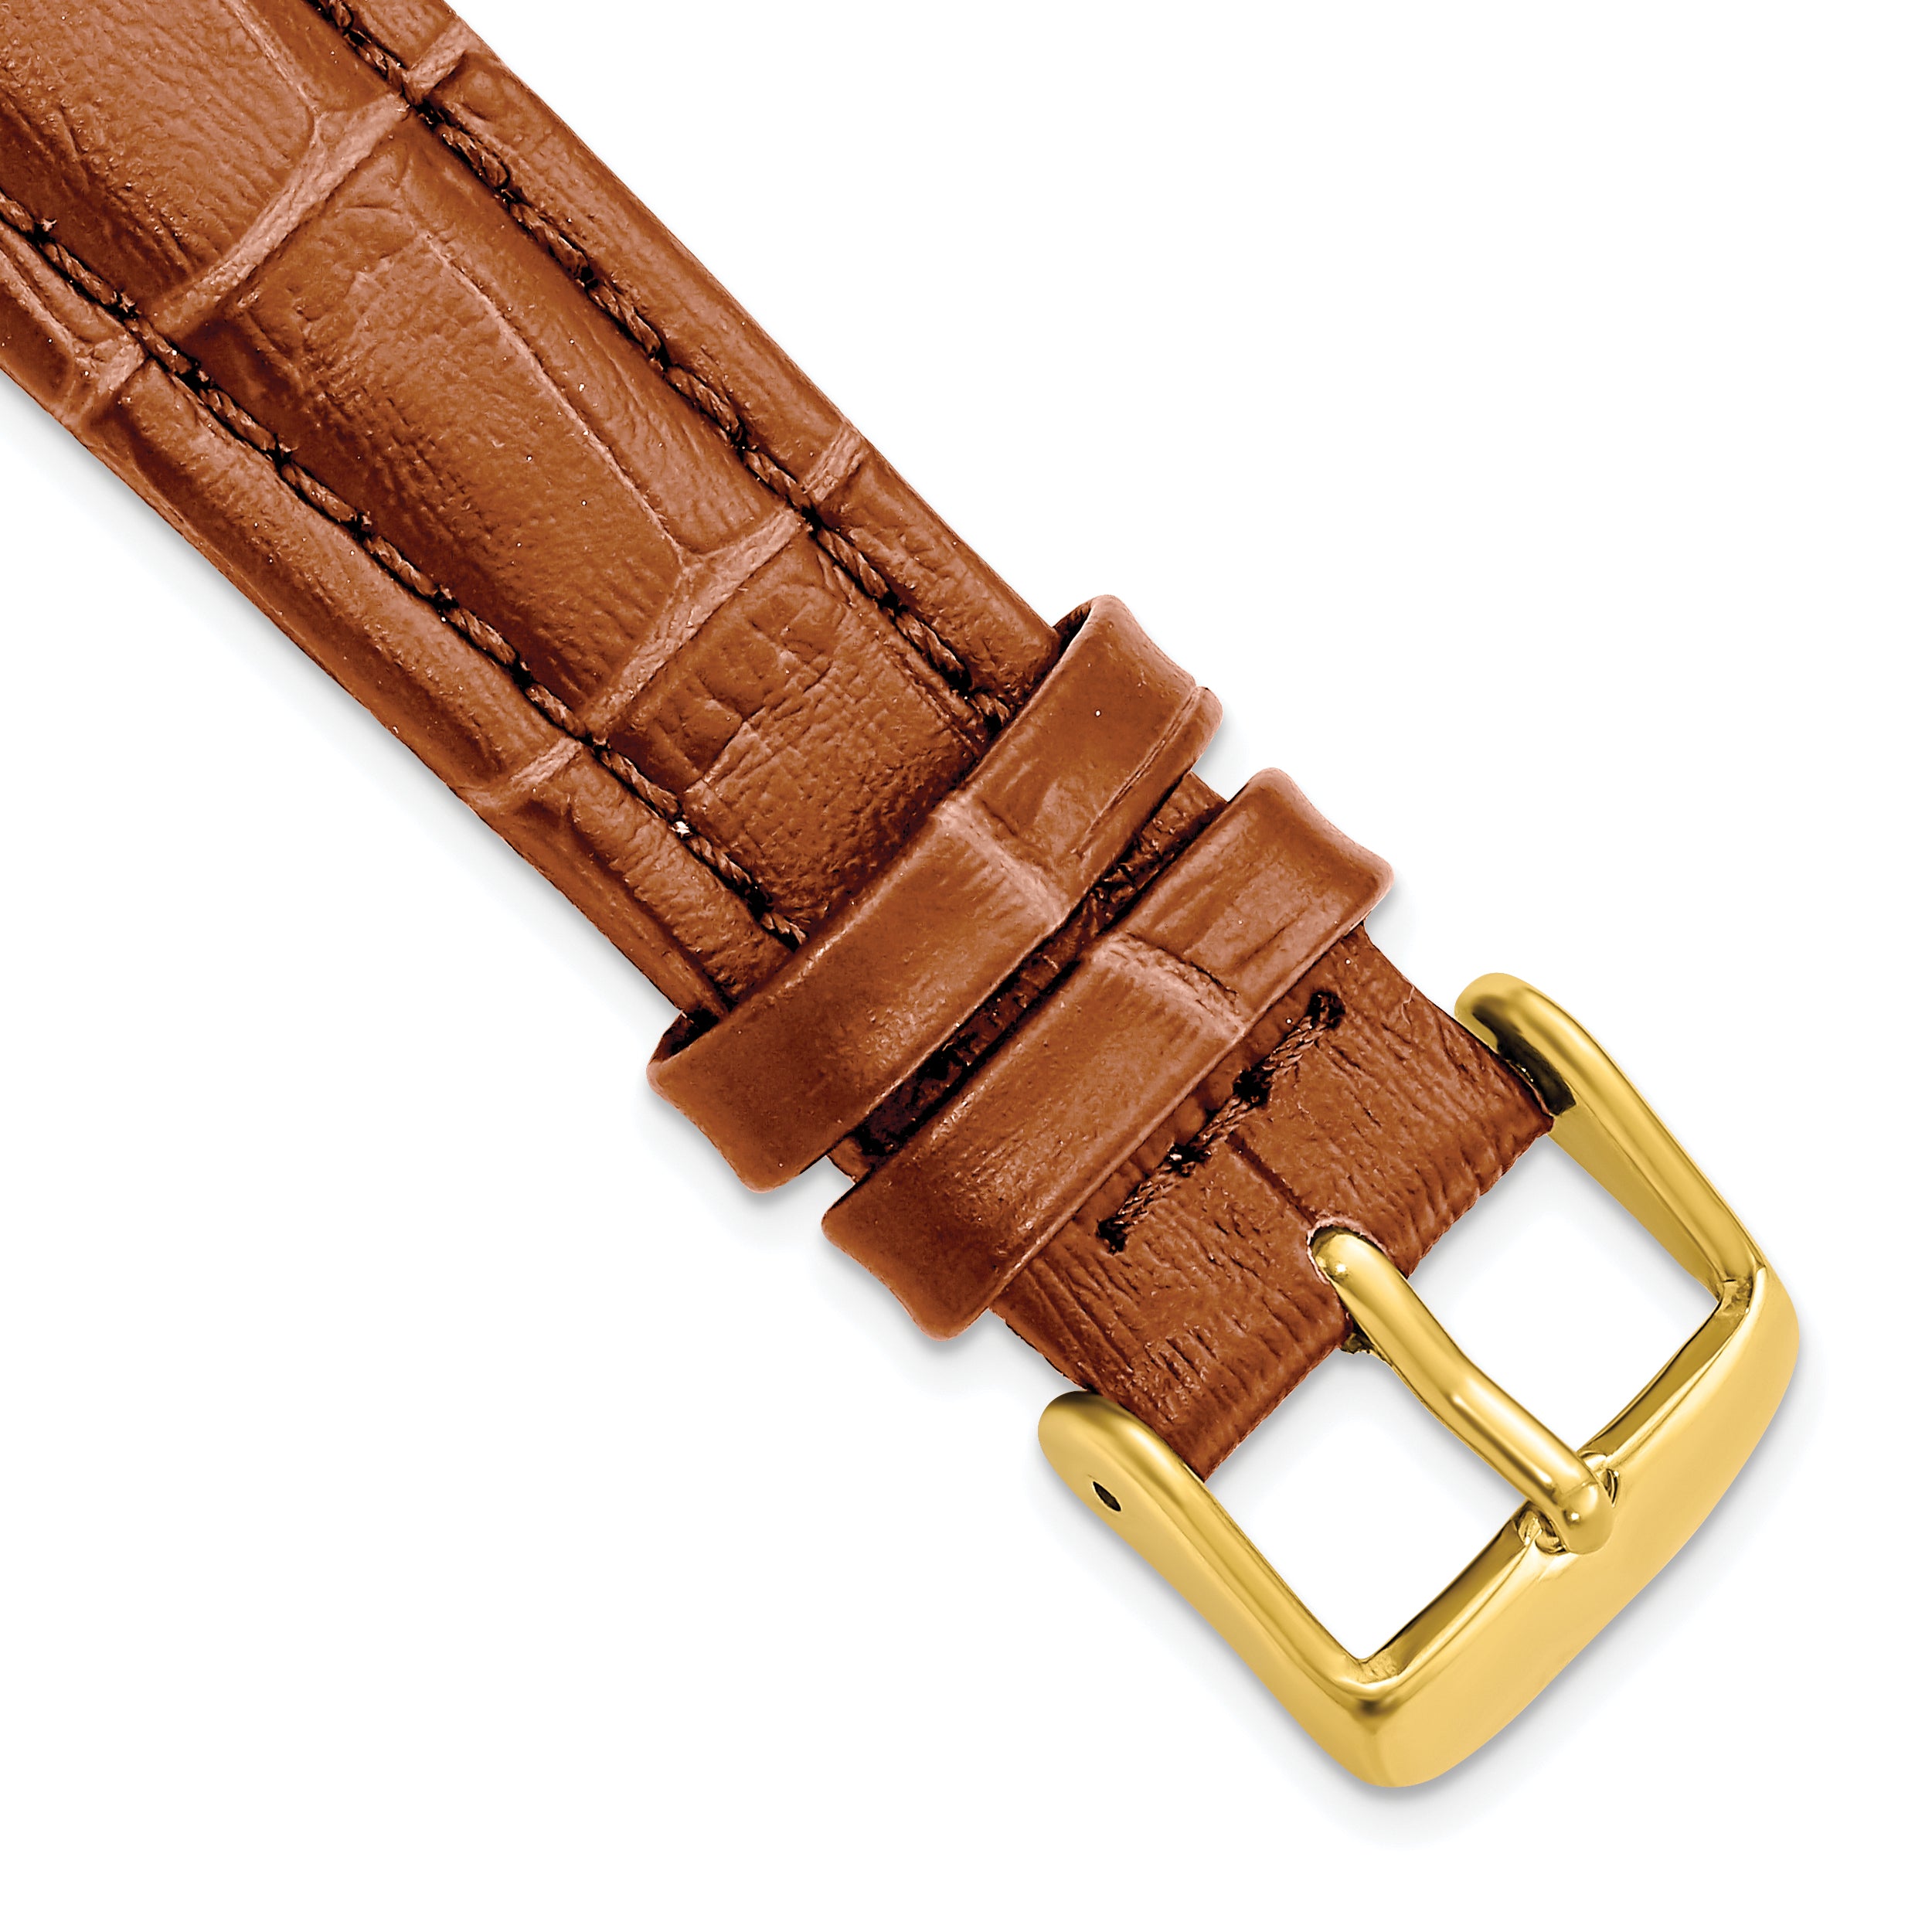 DeBeer 19mm Havana Matte Alligator Grain Leather with Gold-tone Buckle 7.5 inch Watch Band